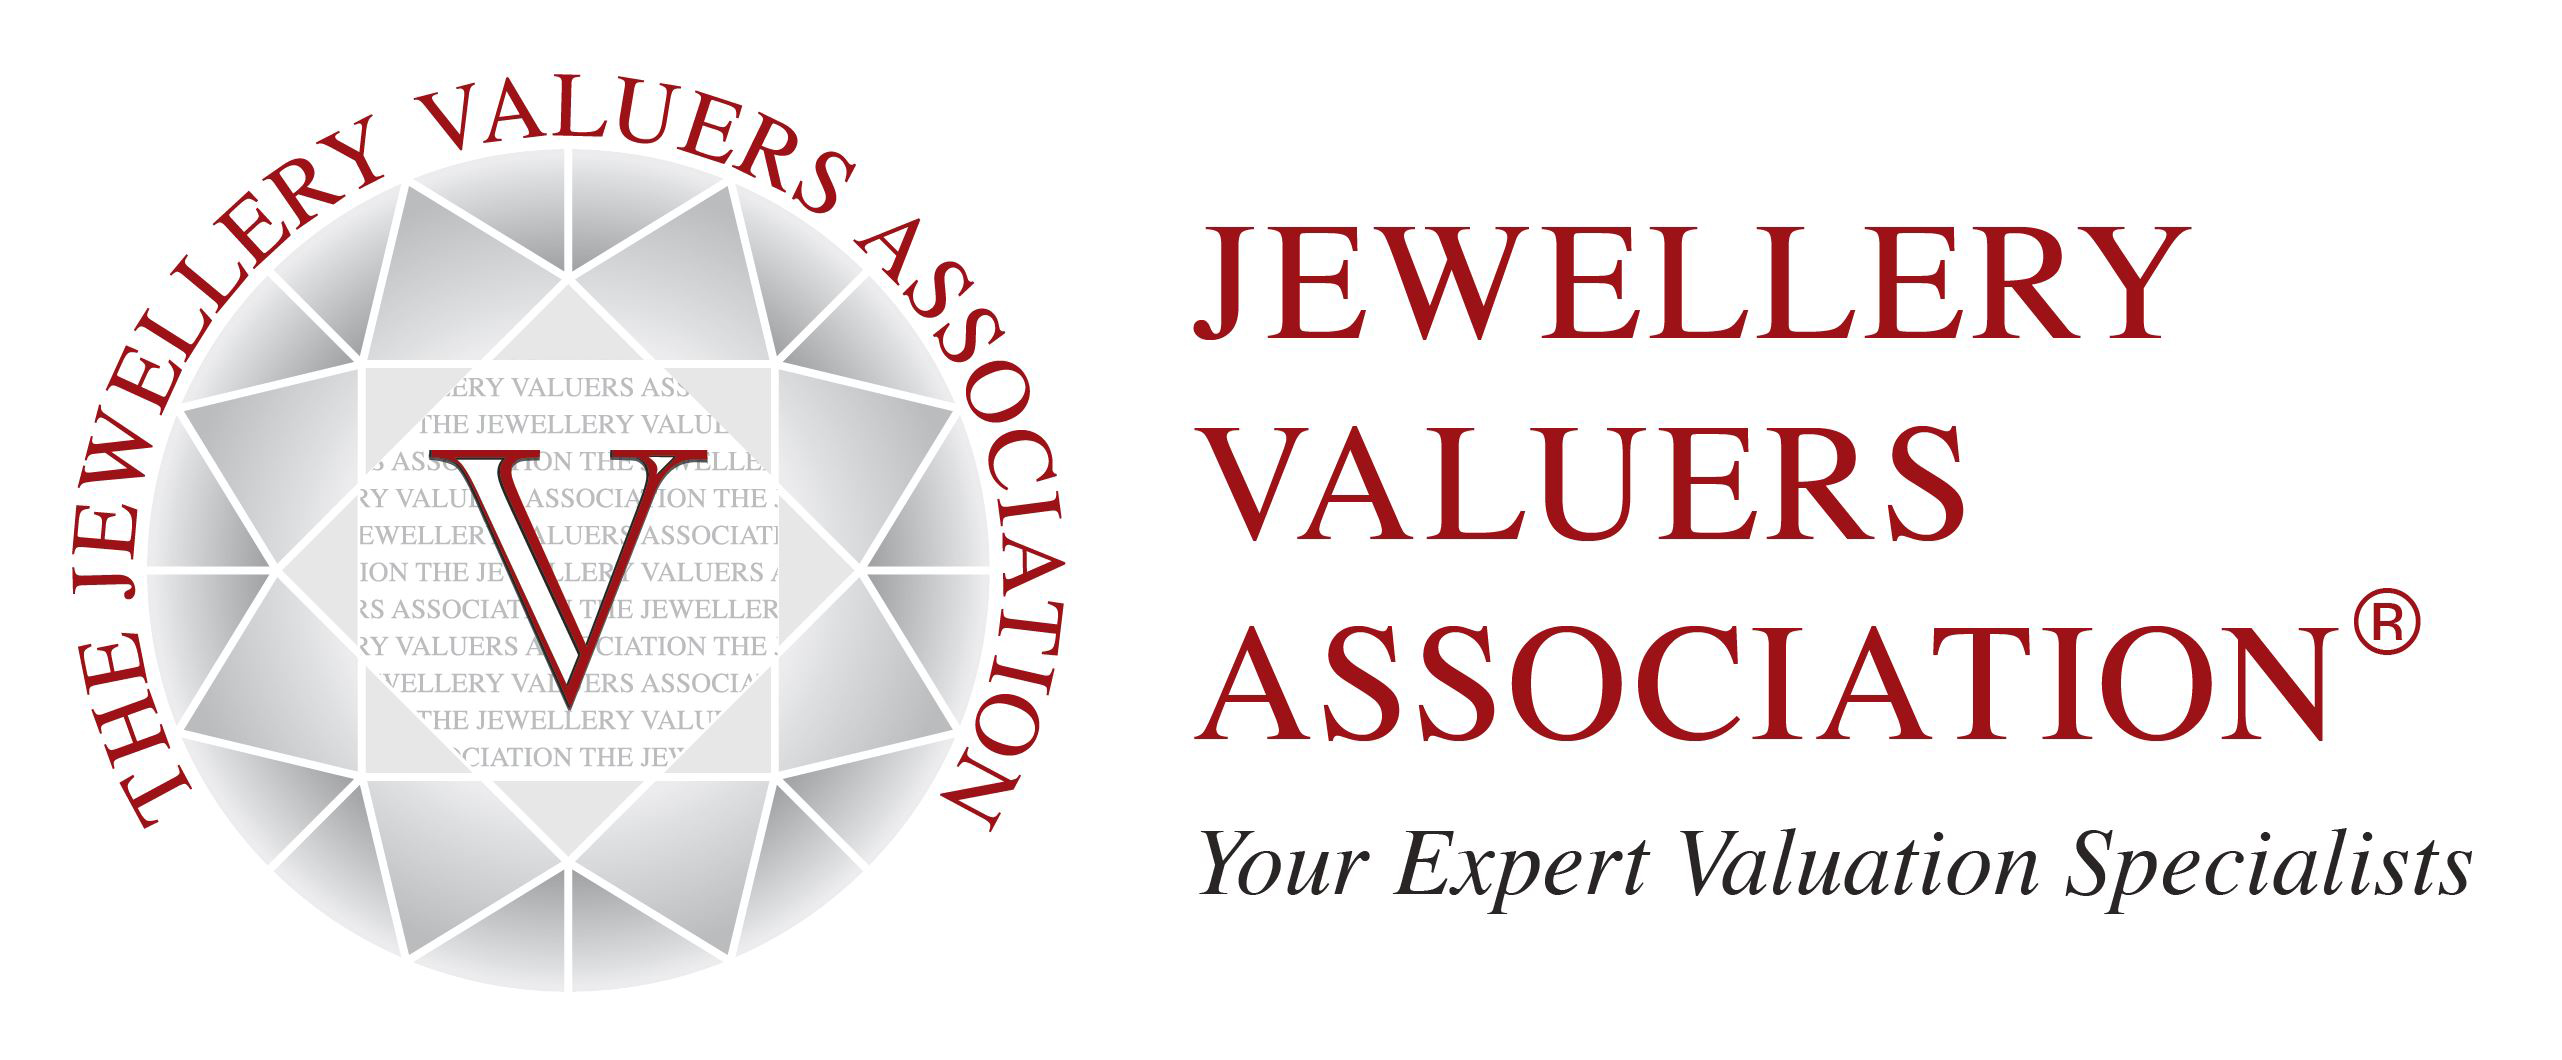 Jewellery Valuers Association